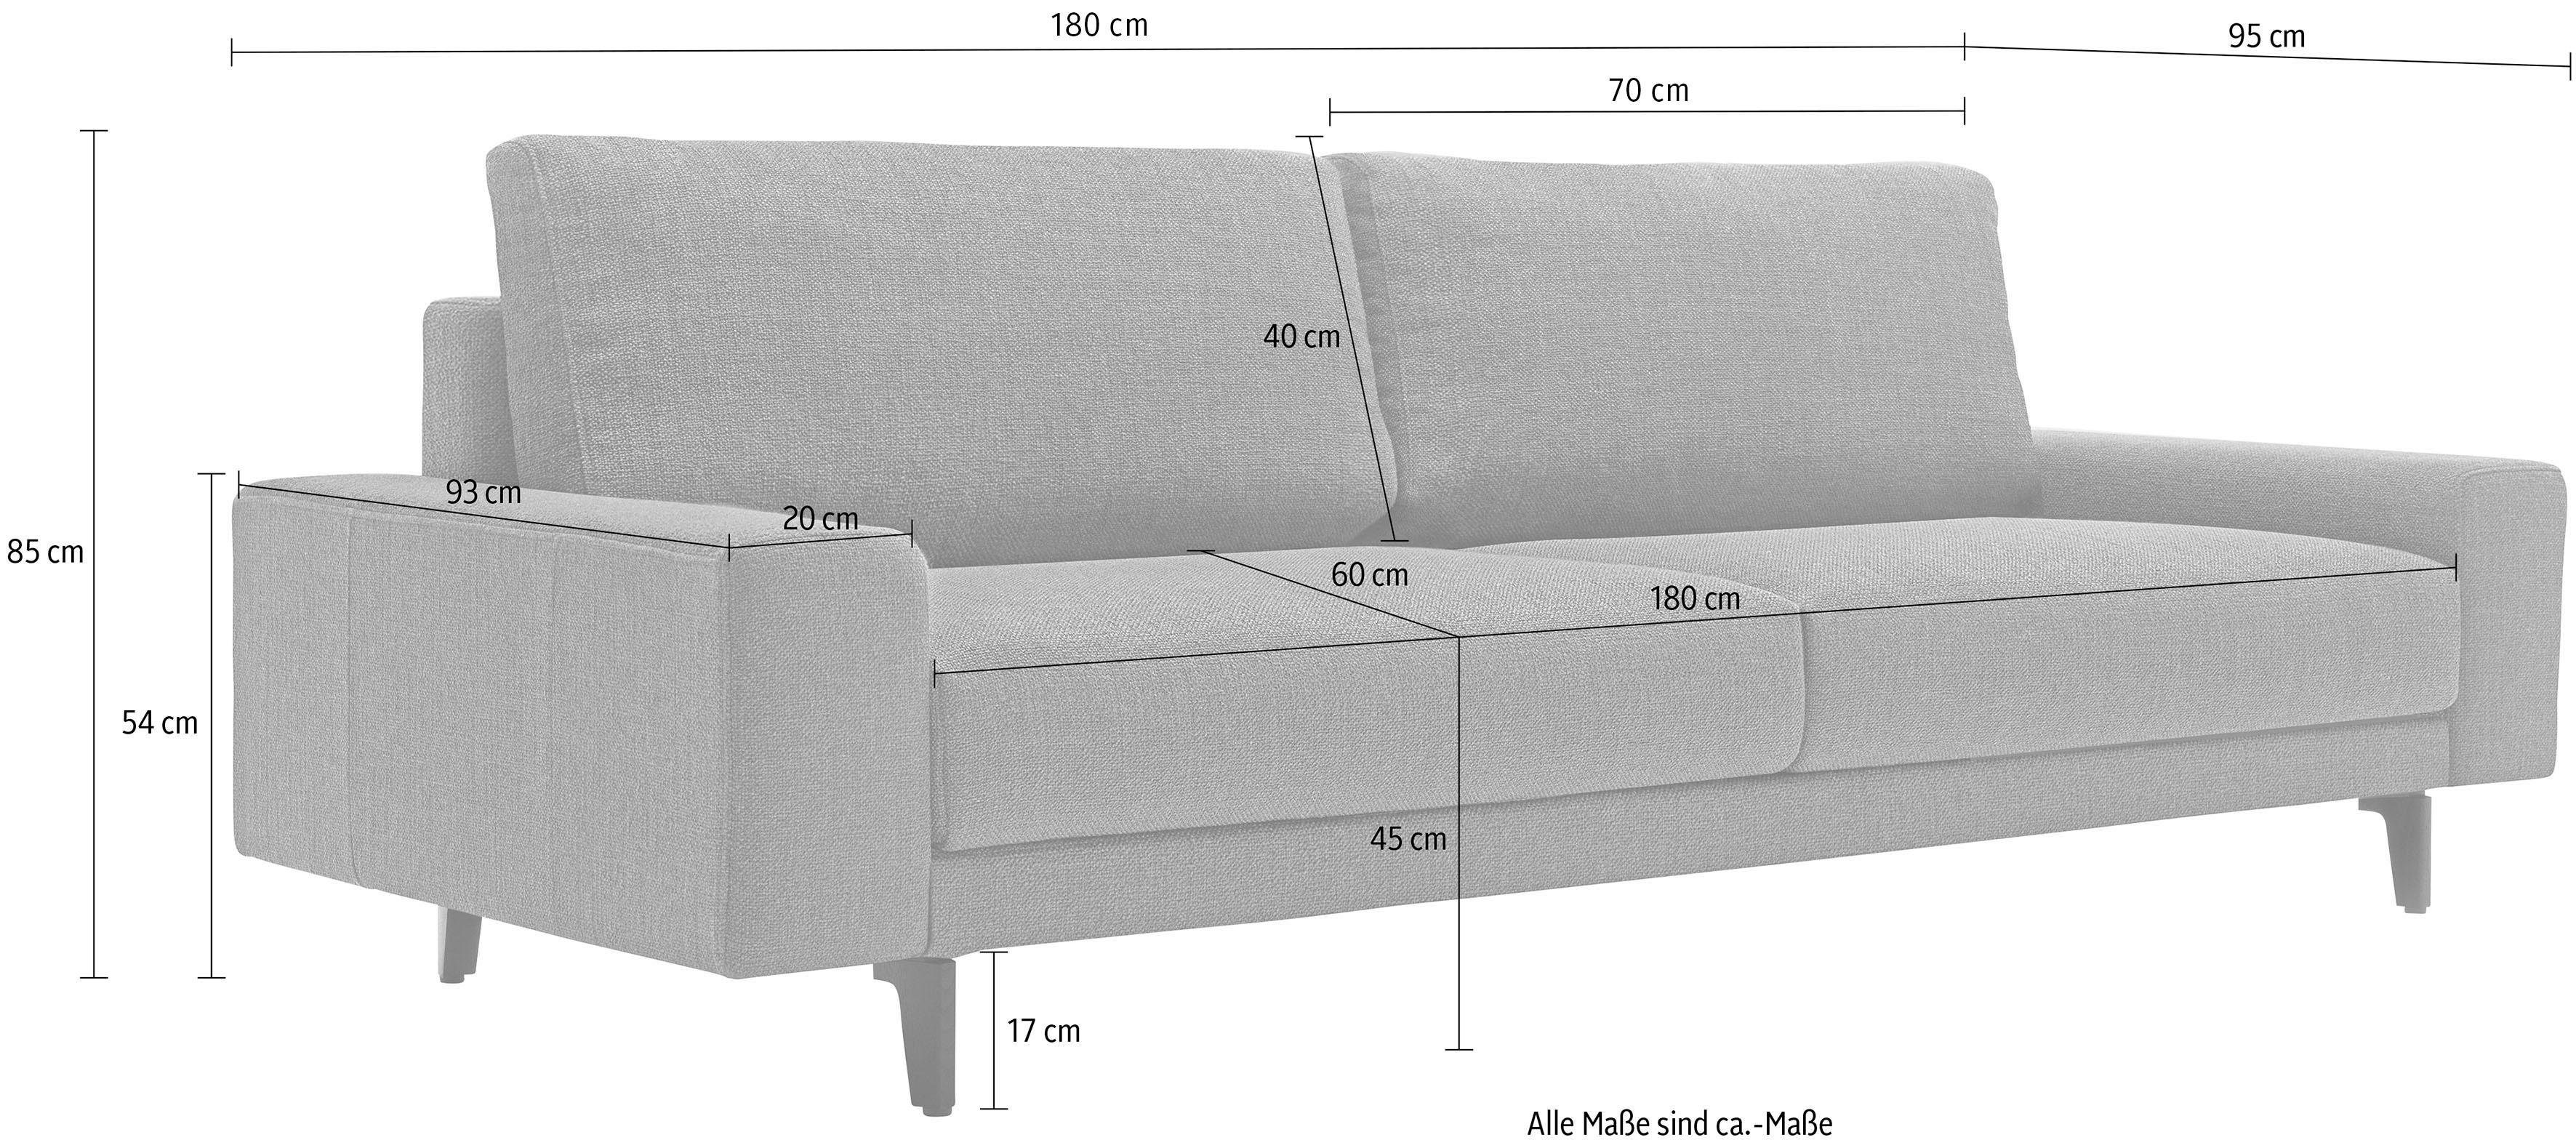 180 Breite hs.450, in sofa cm umbragrau, Alugussfüße breit niedrig, 2-Sitzer Armlehne hülsta